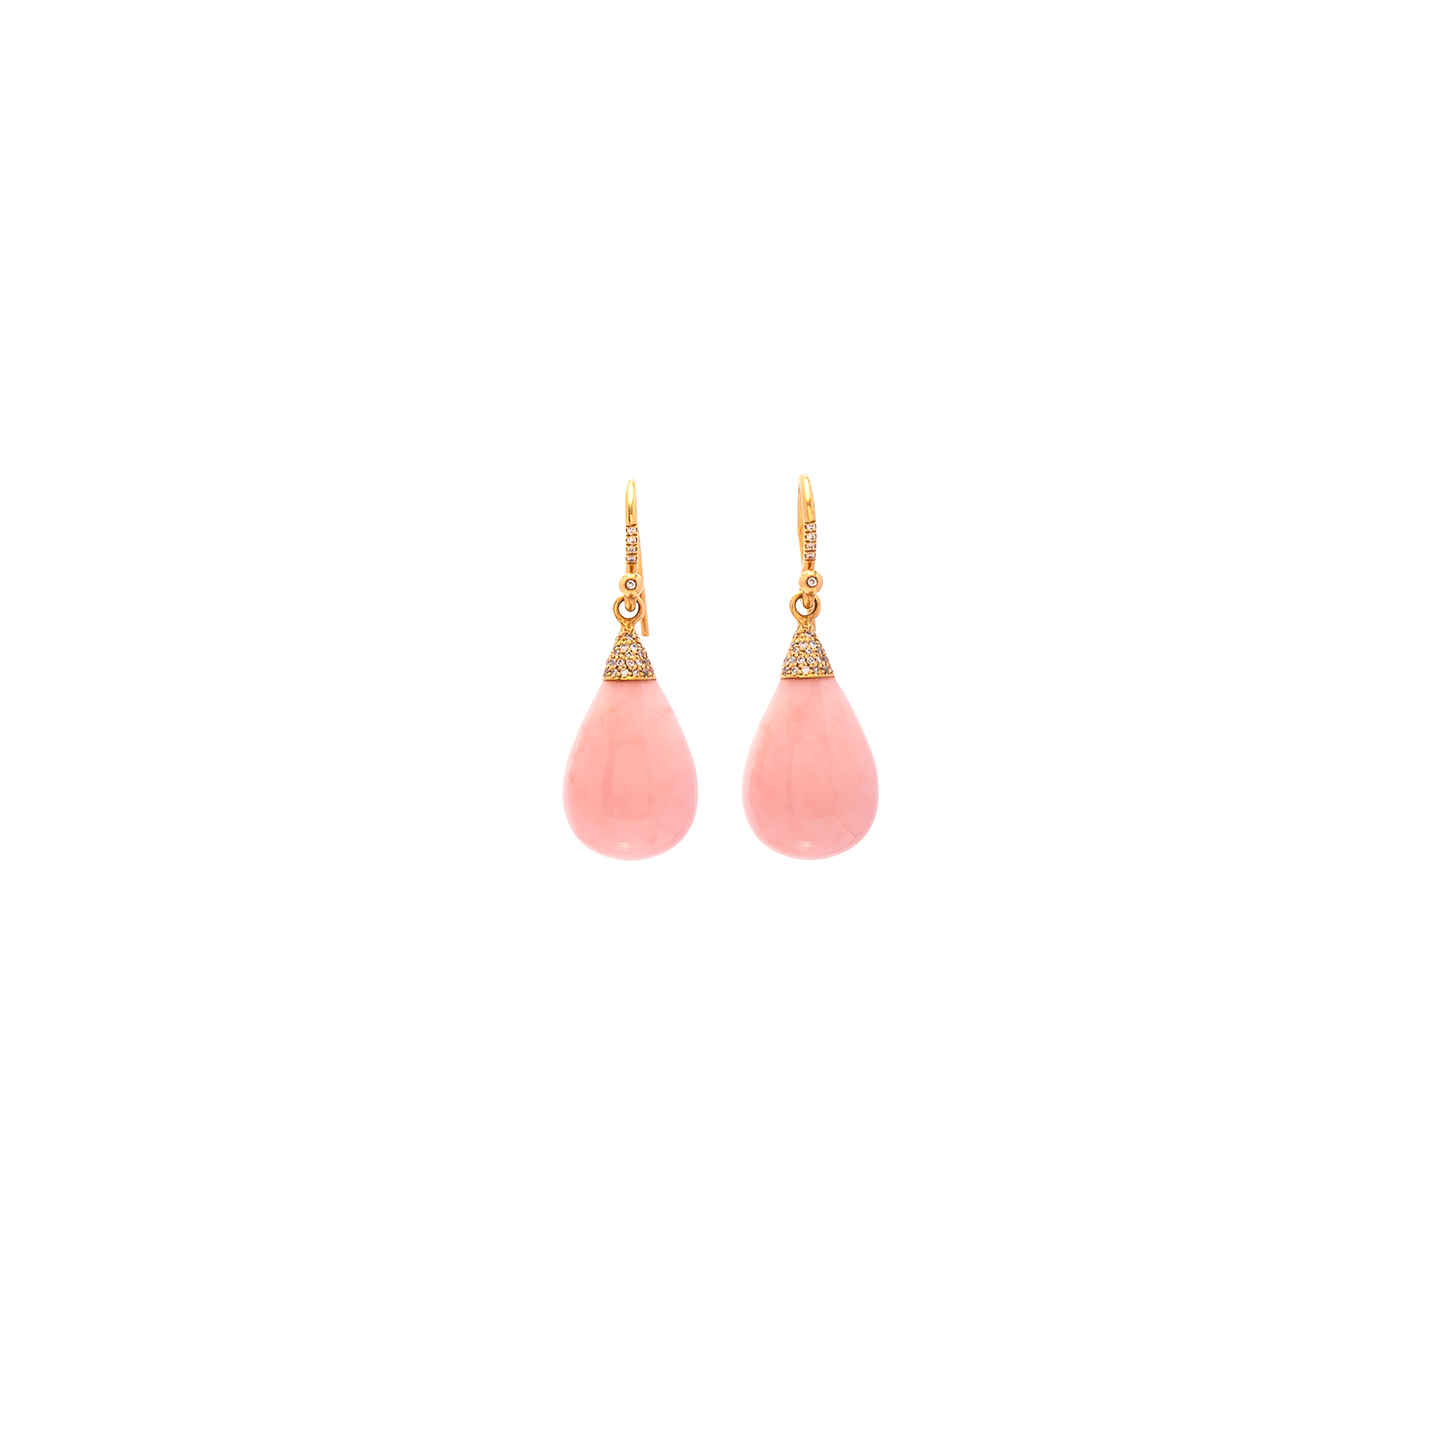 Irene Neuwirth One-of-Kind Pink Opal and Diamond Earrings